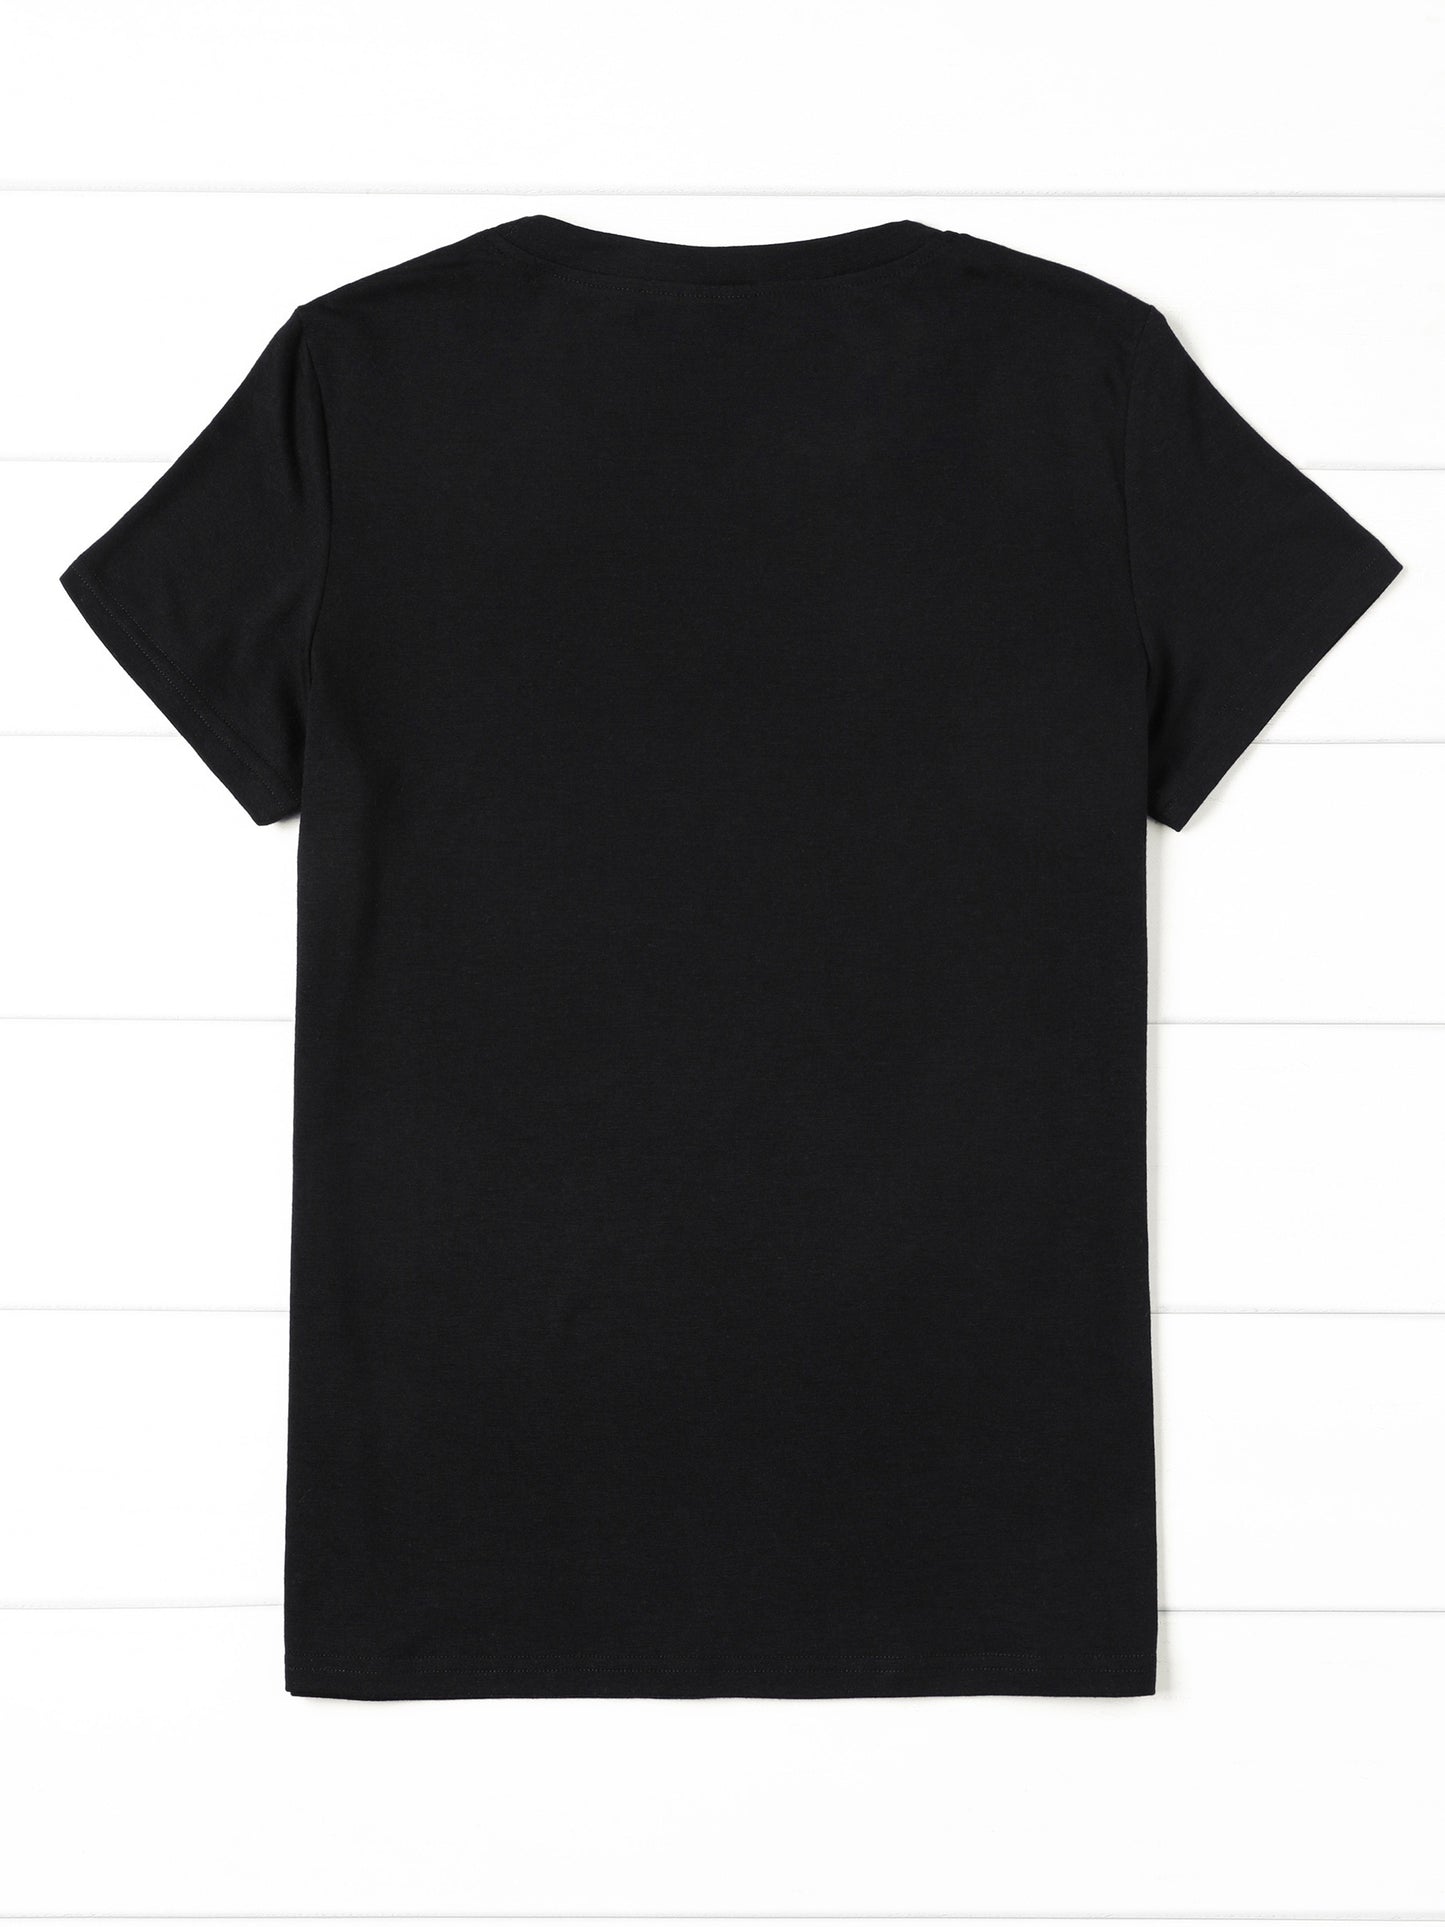 Dog Paw Print T-Shirt, Short Sleeve Crew Neck Casual Top